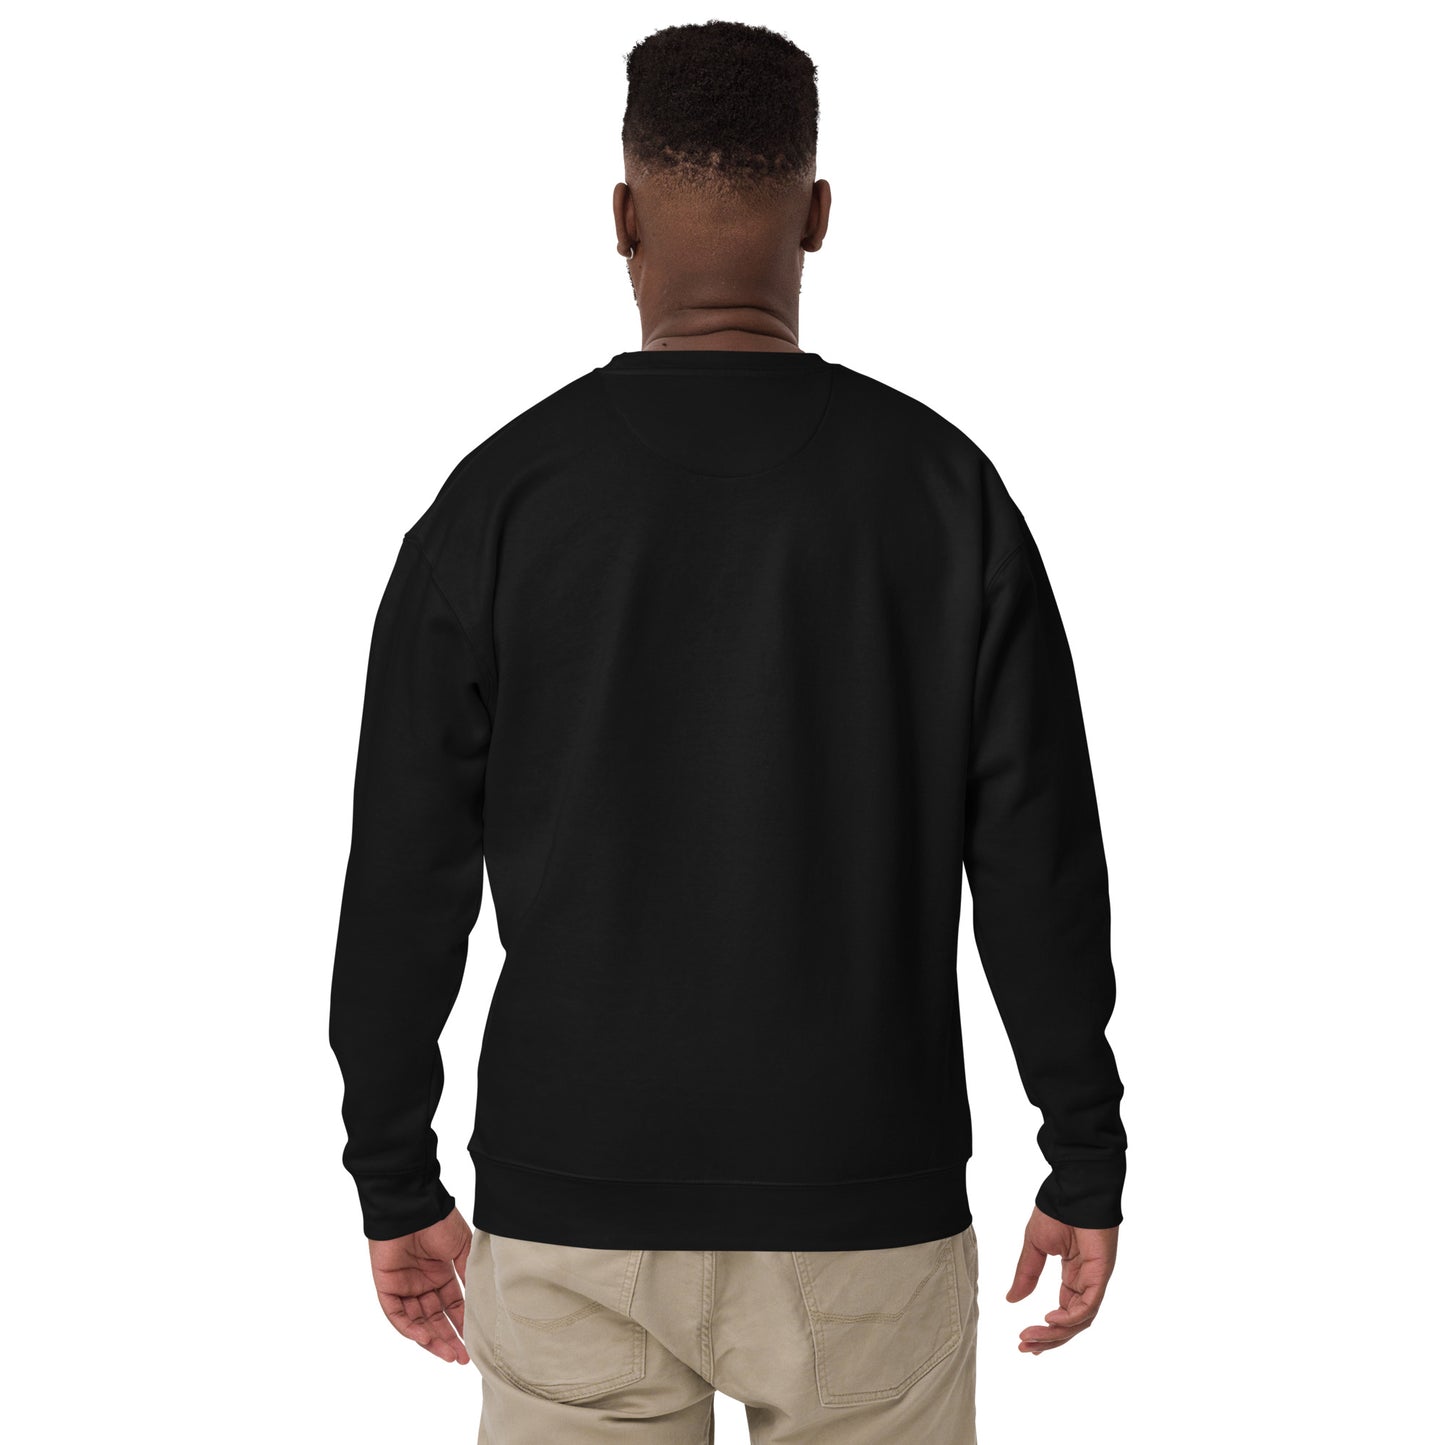 Break Time - Unisex Premium Sweatshirt (S-3XL)